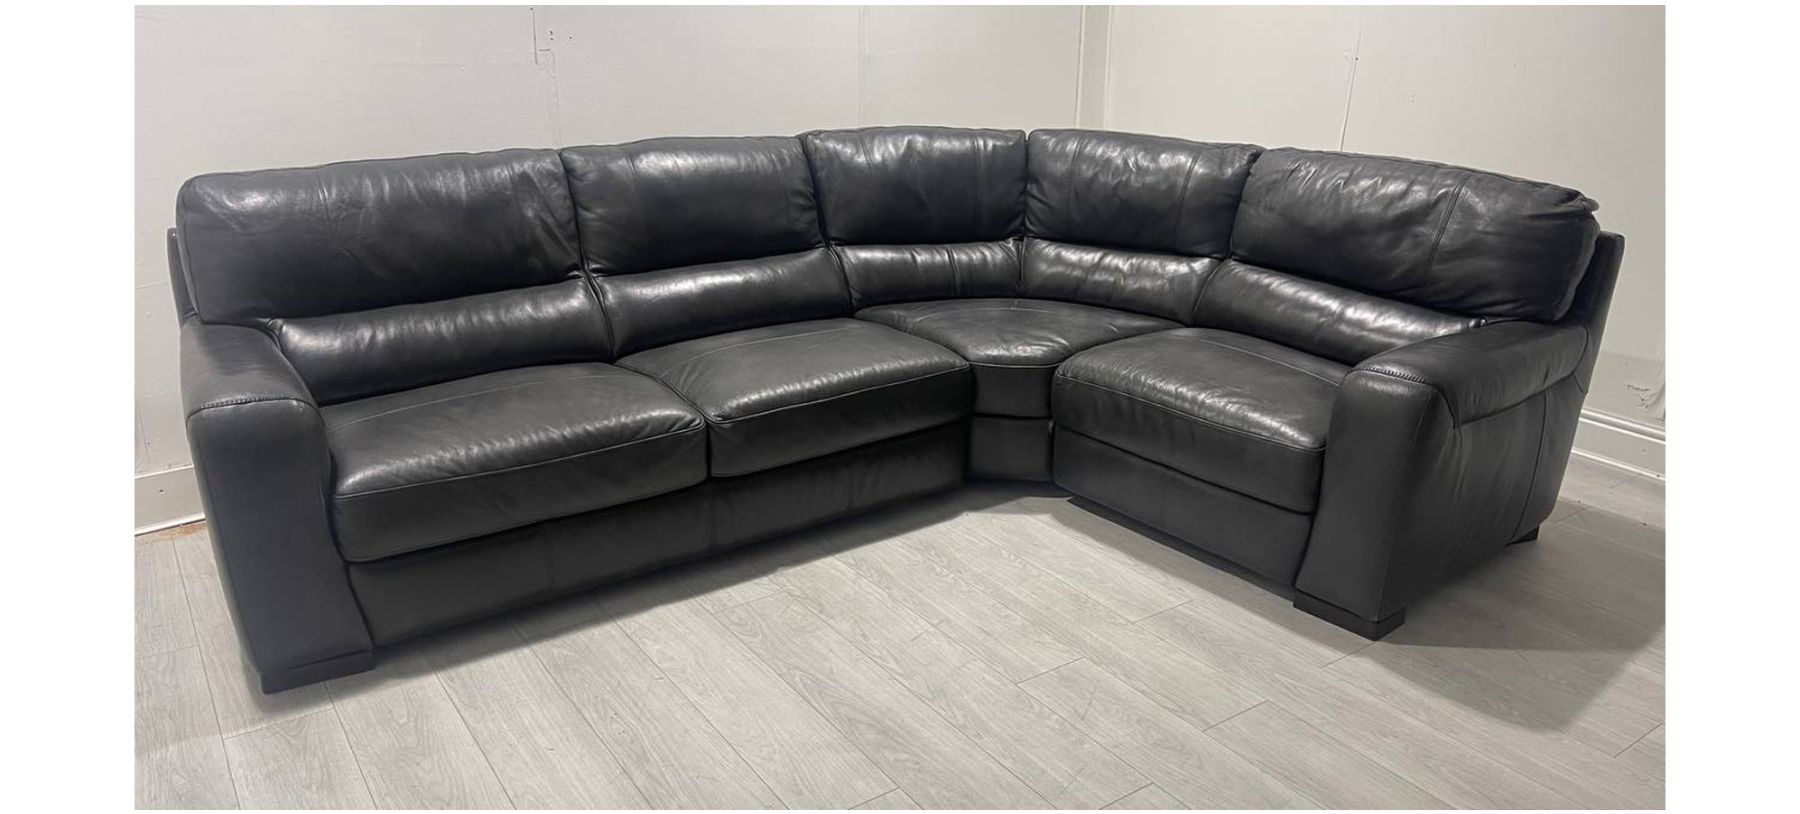 Lucca Black Rhf Leather Corner Sofa